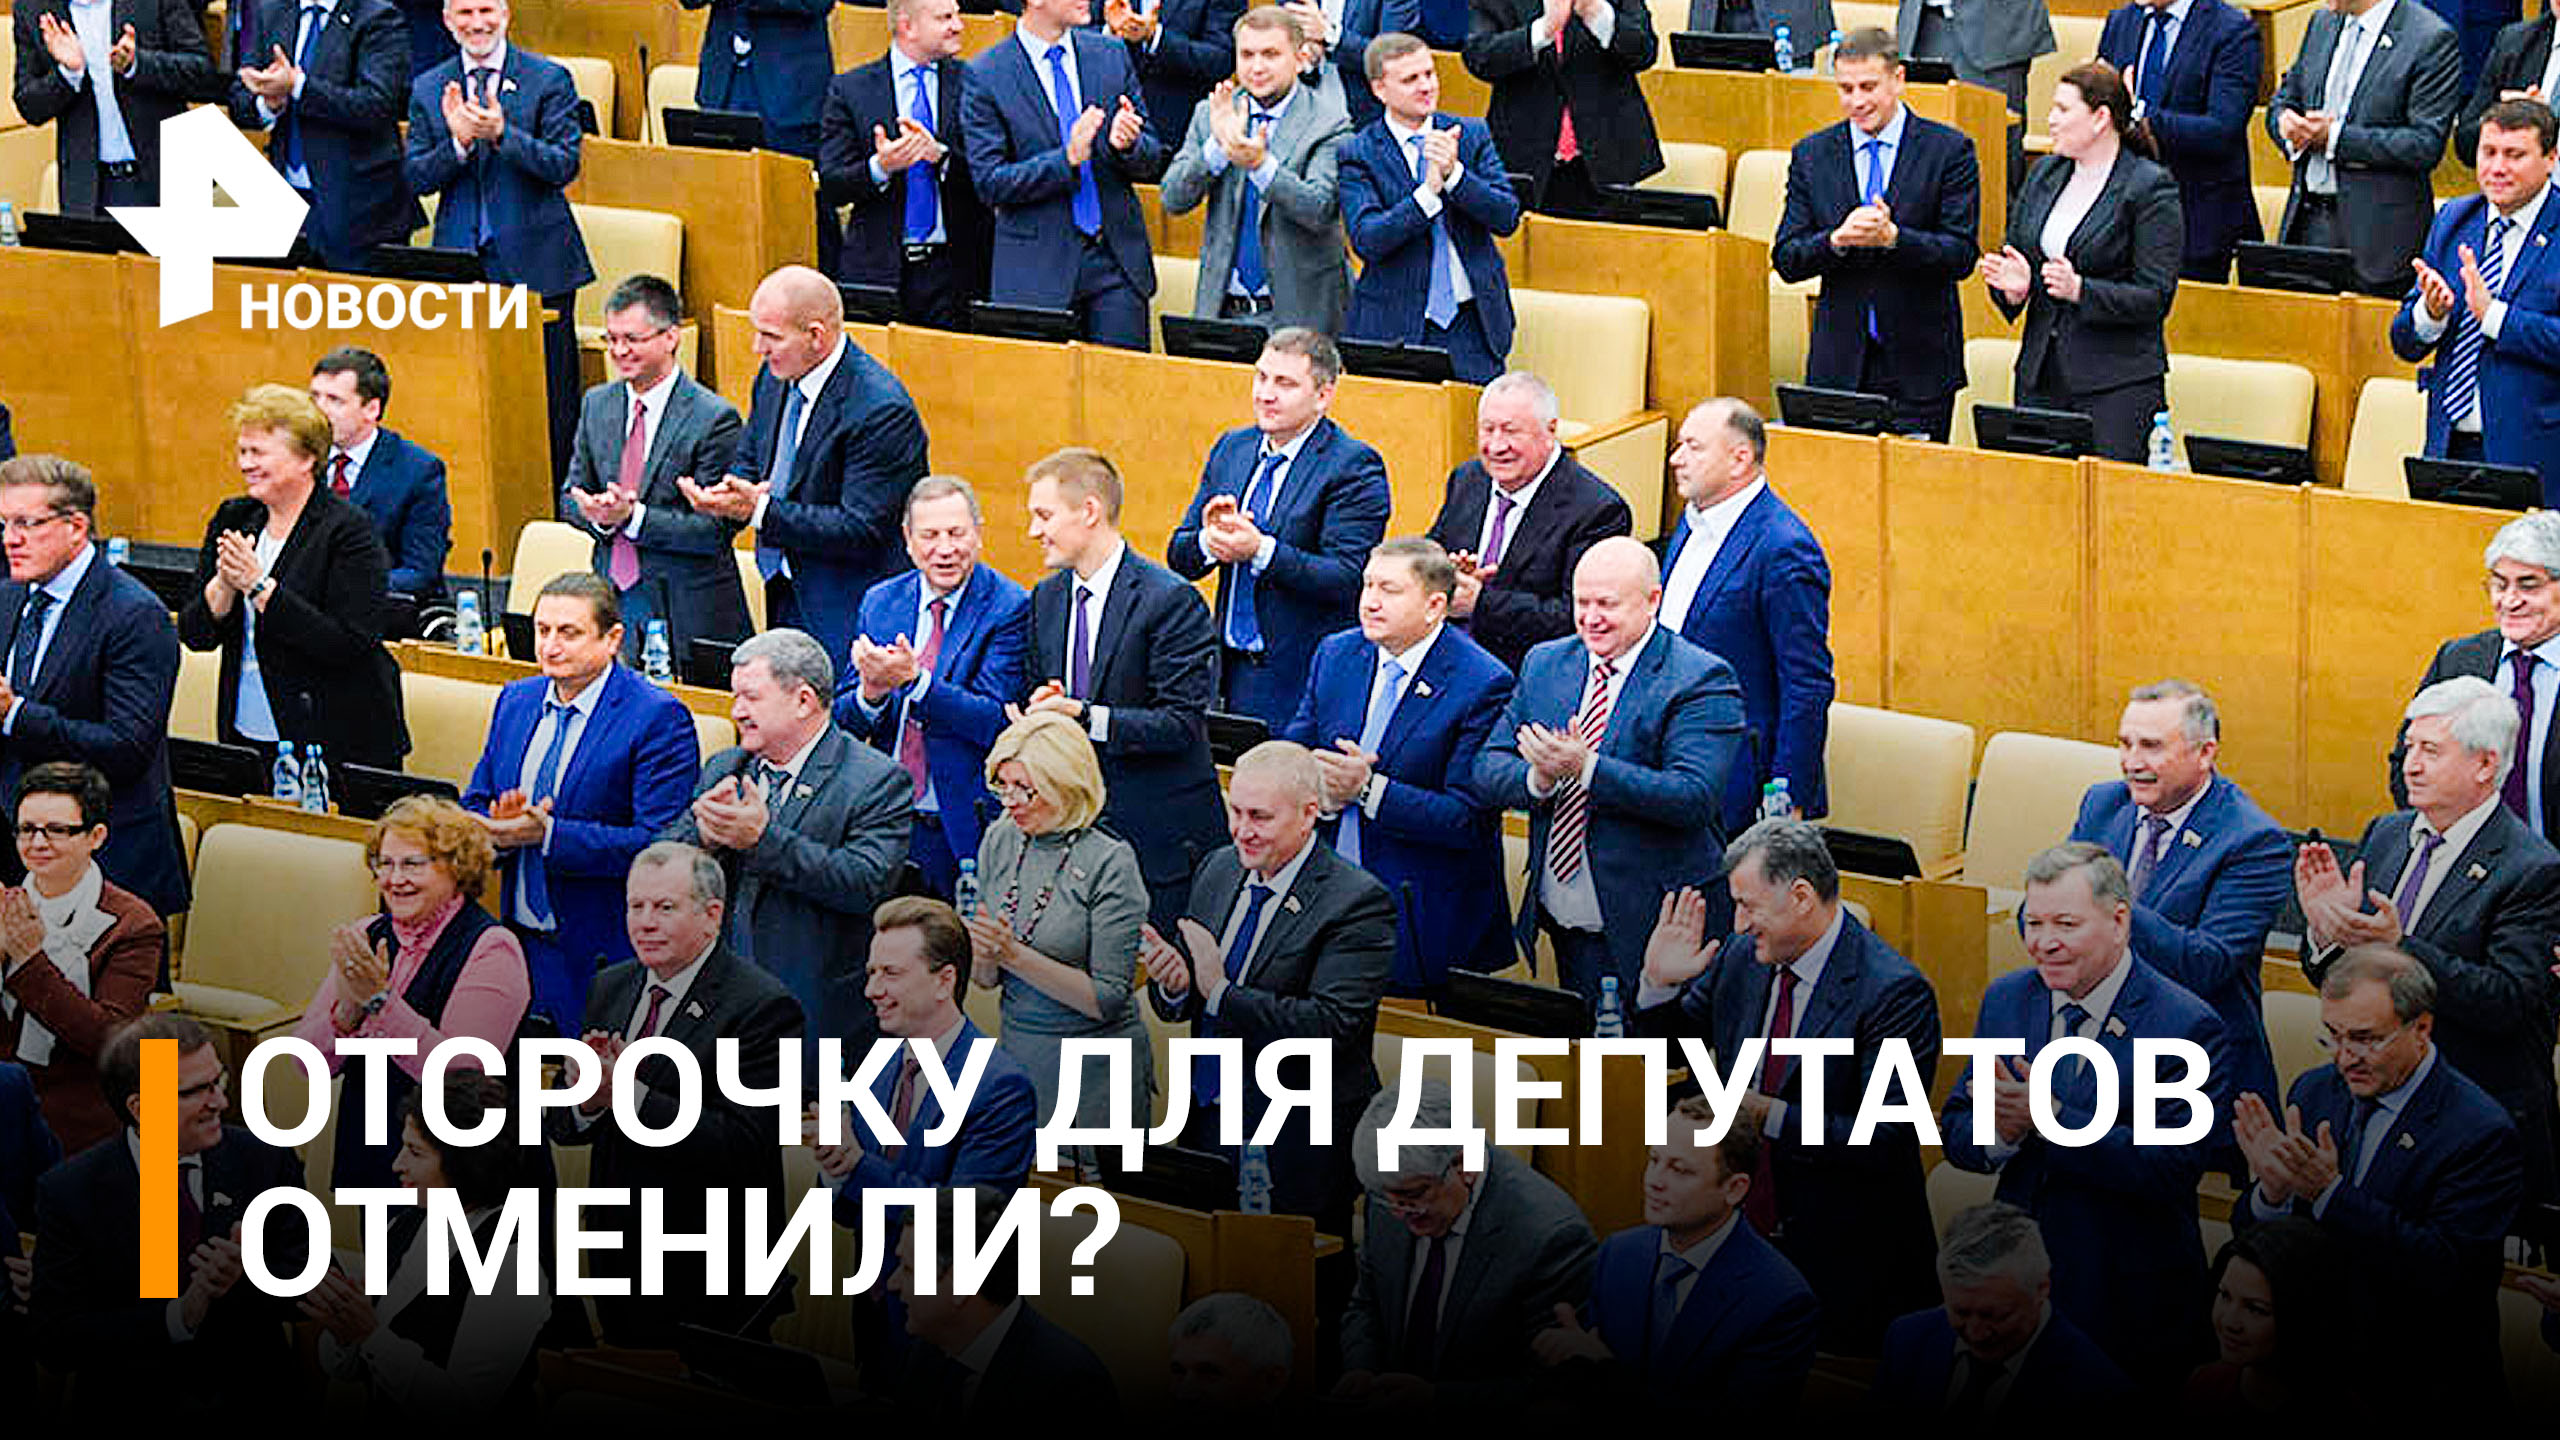 В Госдуме внесен проект об отмене отсрочки от призыва для парламентариев / РЕН Новости